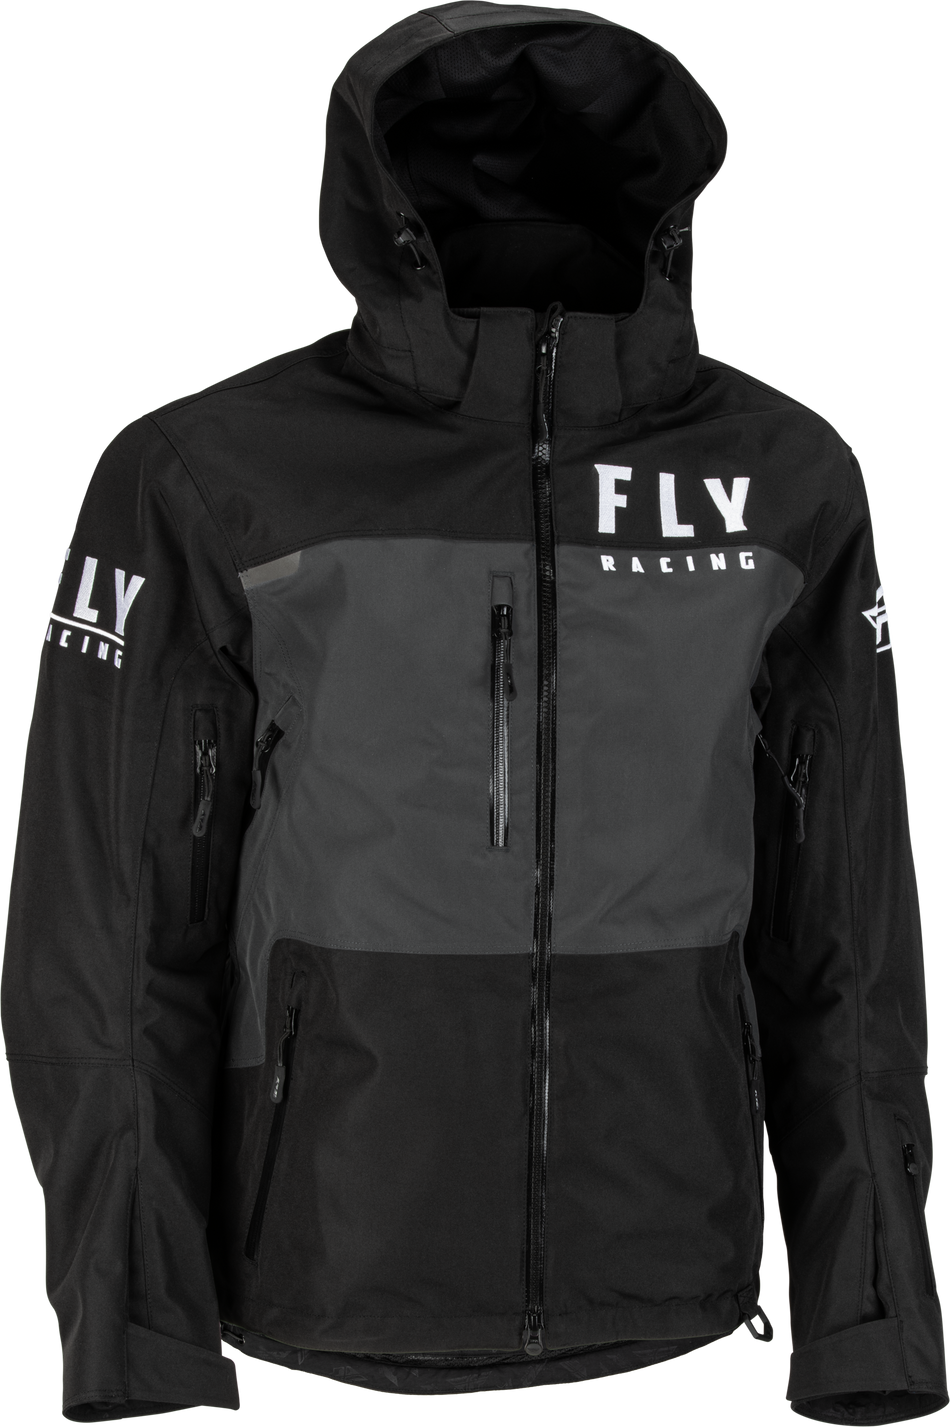 FLY RACING Carbon Jacket Black/Grey Lg 470-4133L